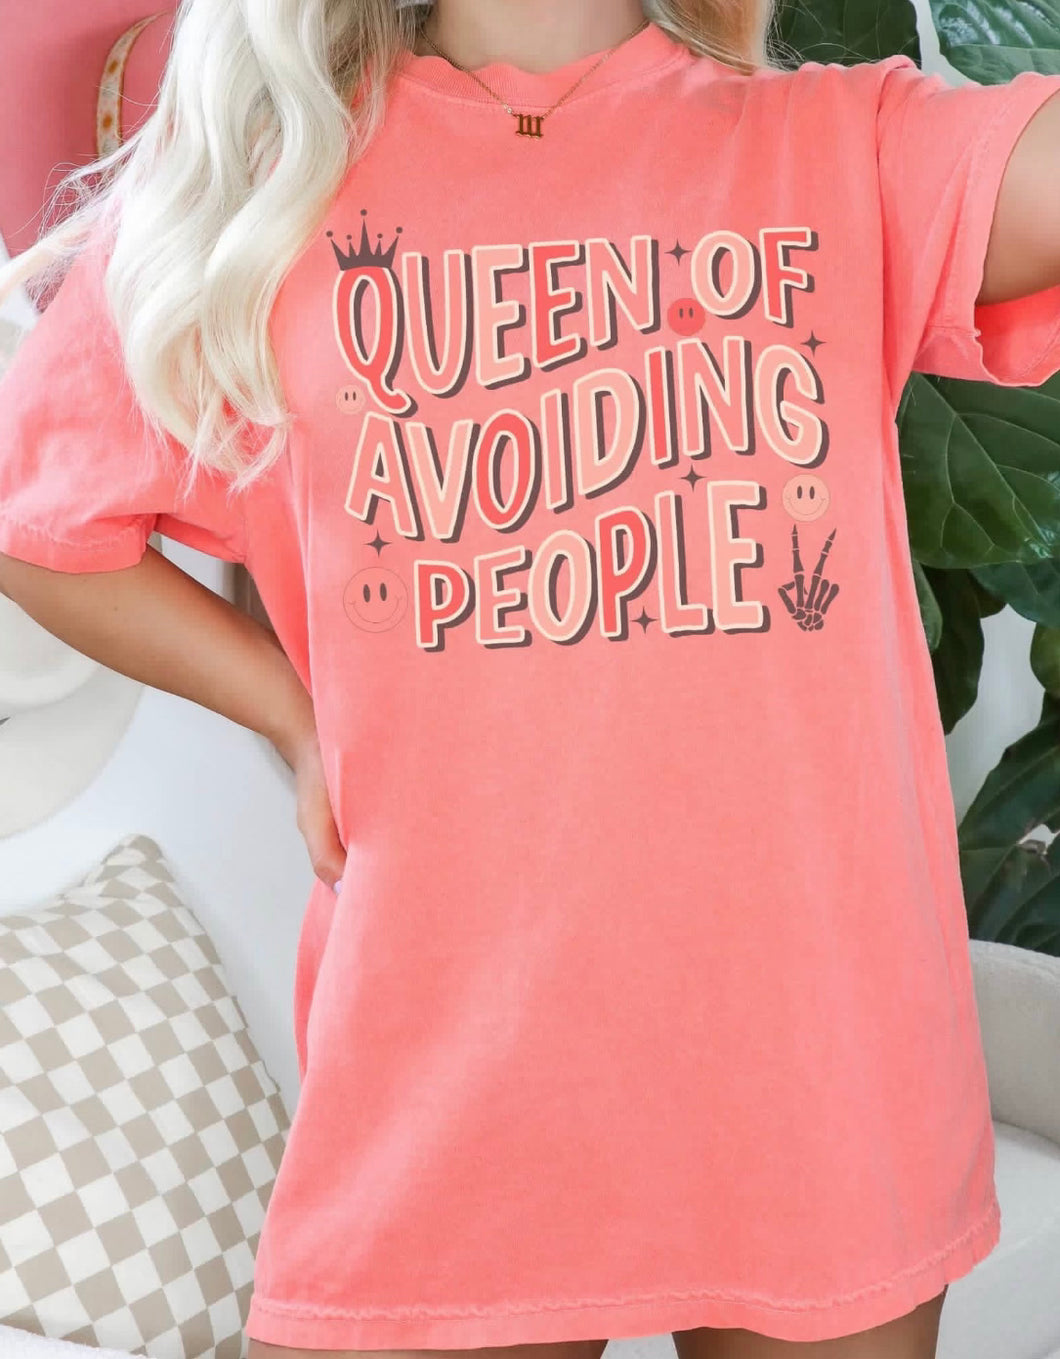 Queen of avoiding people women’s graphic tee - Mavictoria Designs Hot Press Express